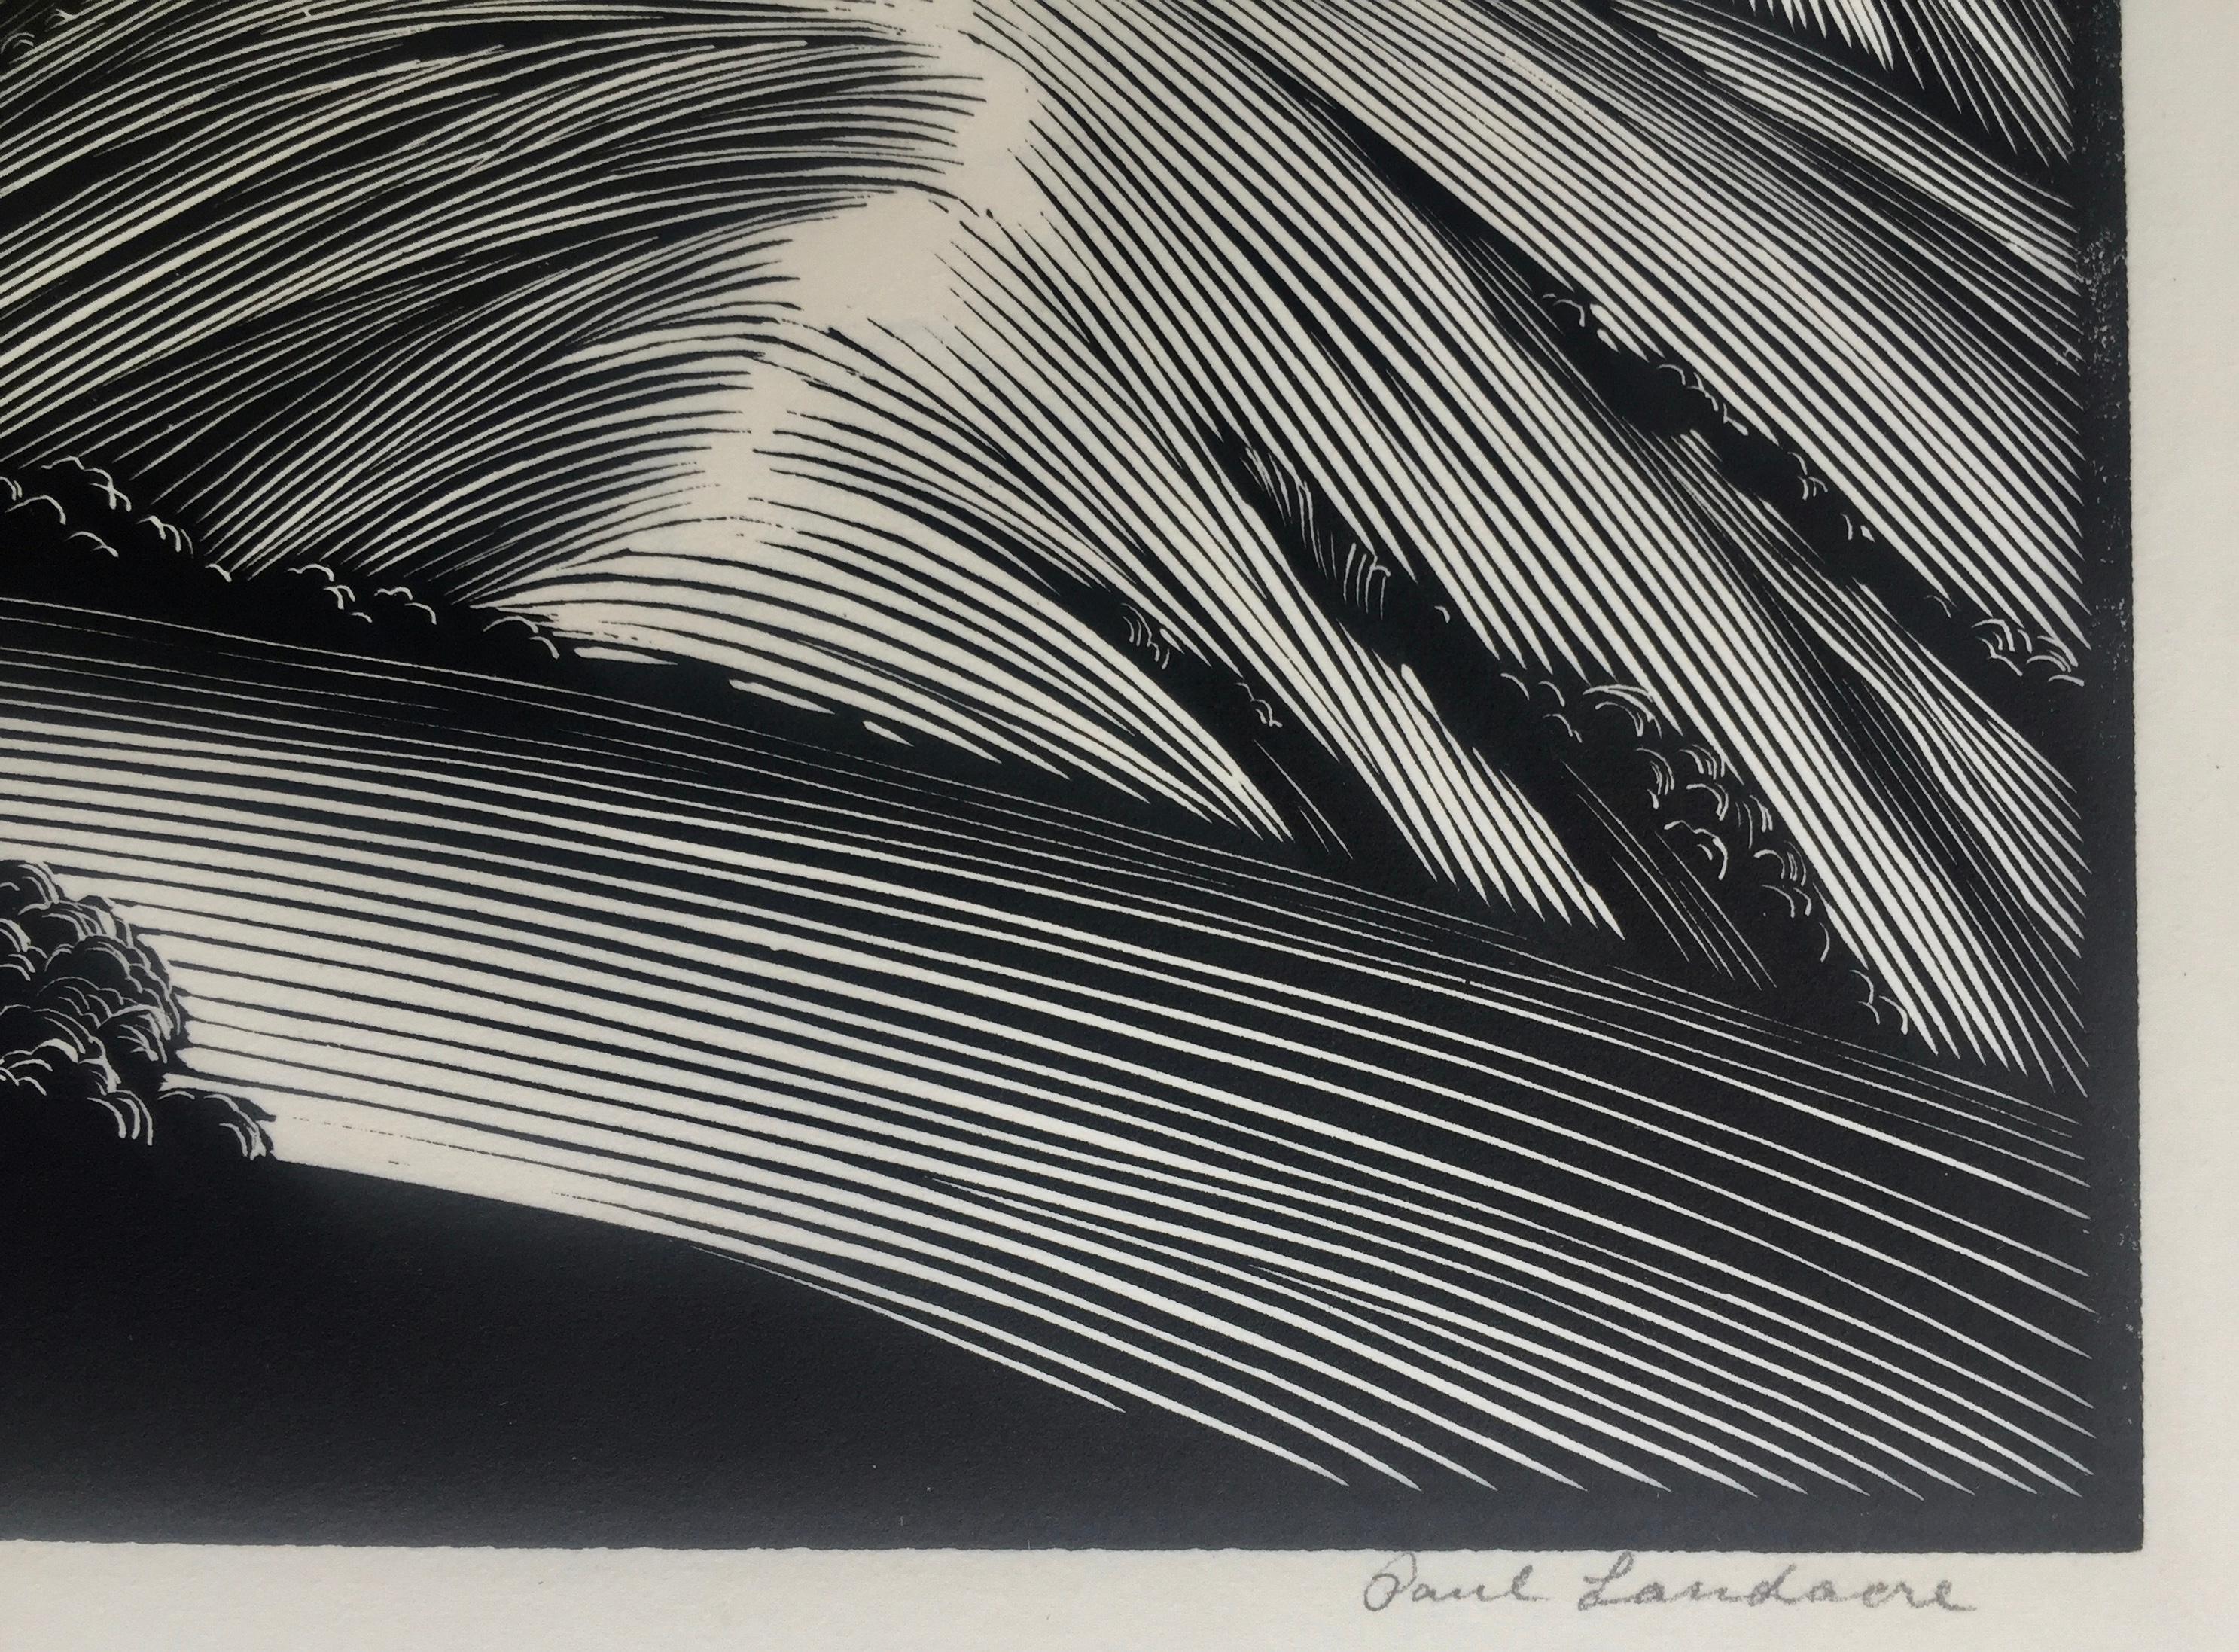 MONTEREY HILLS - American Modern Print by Paul Landacre